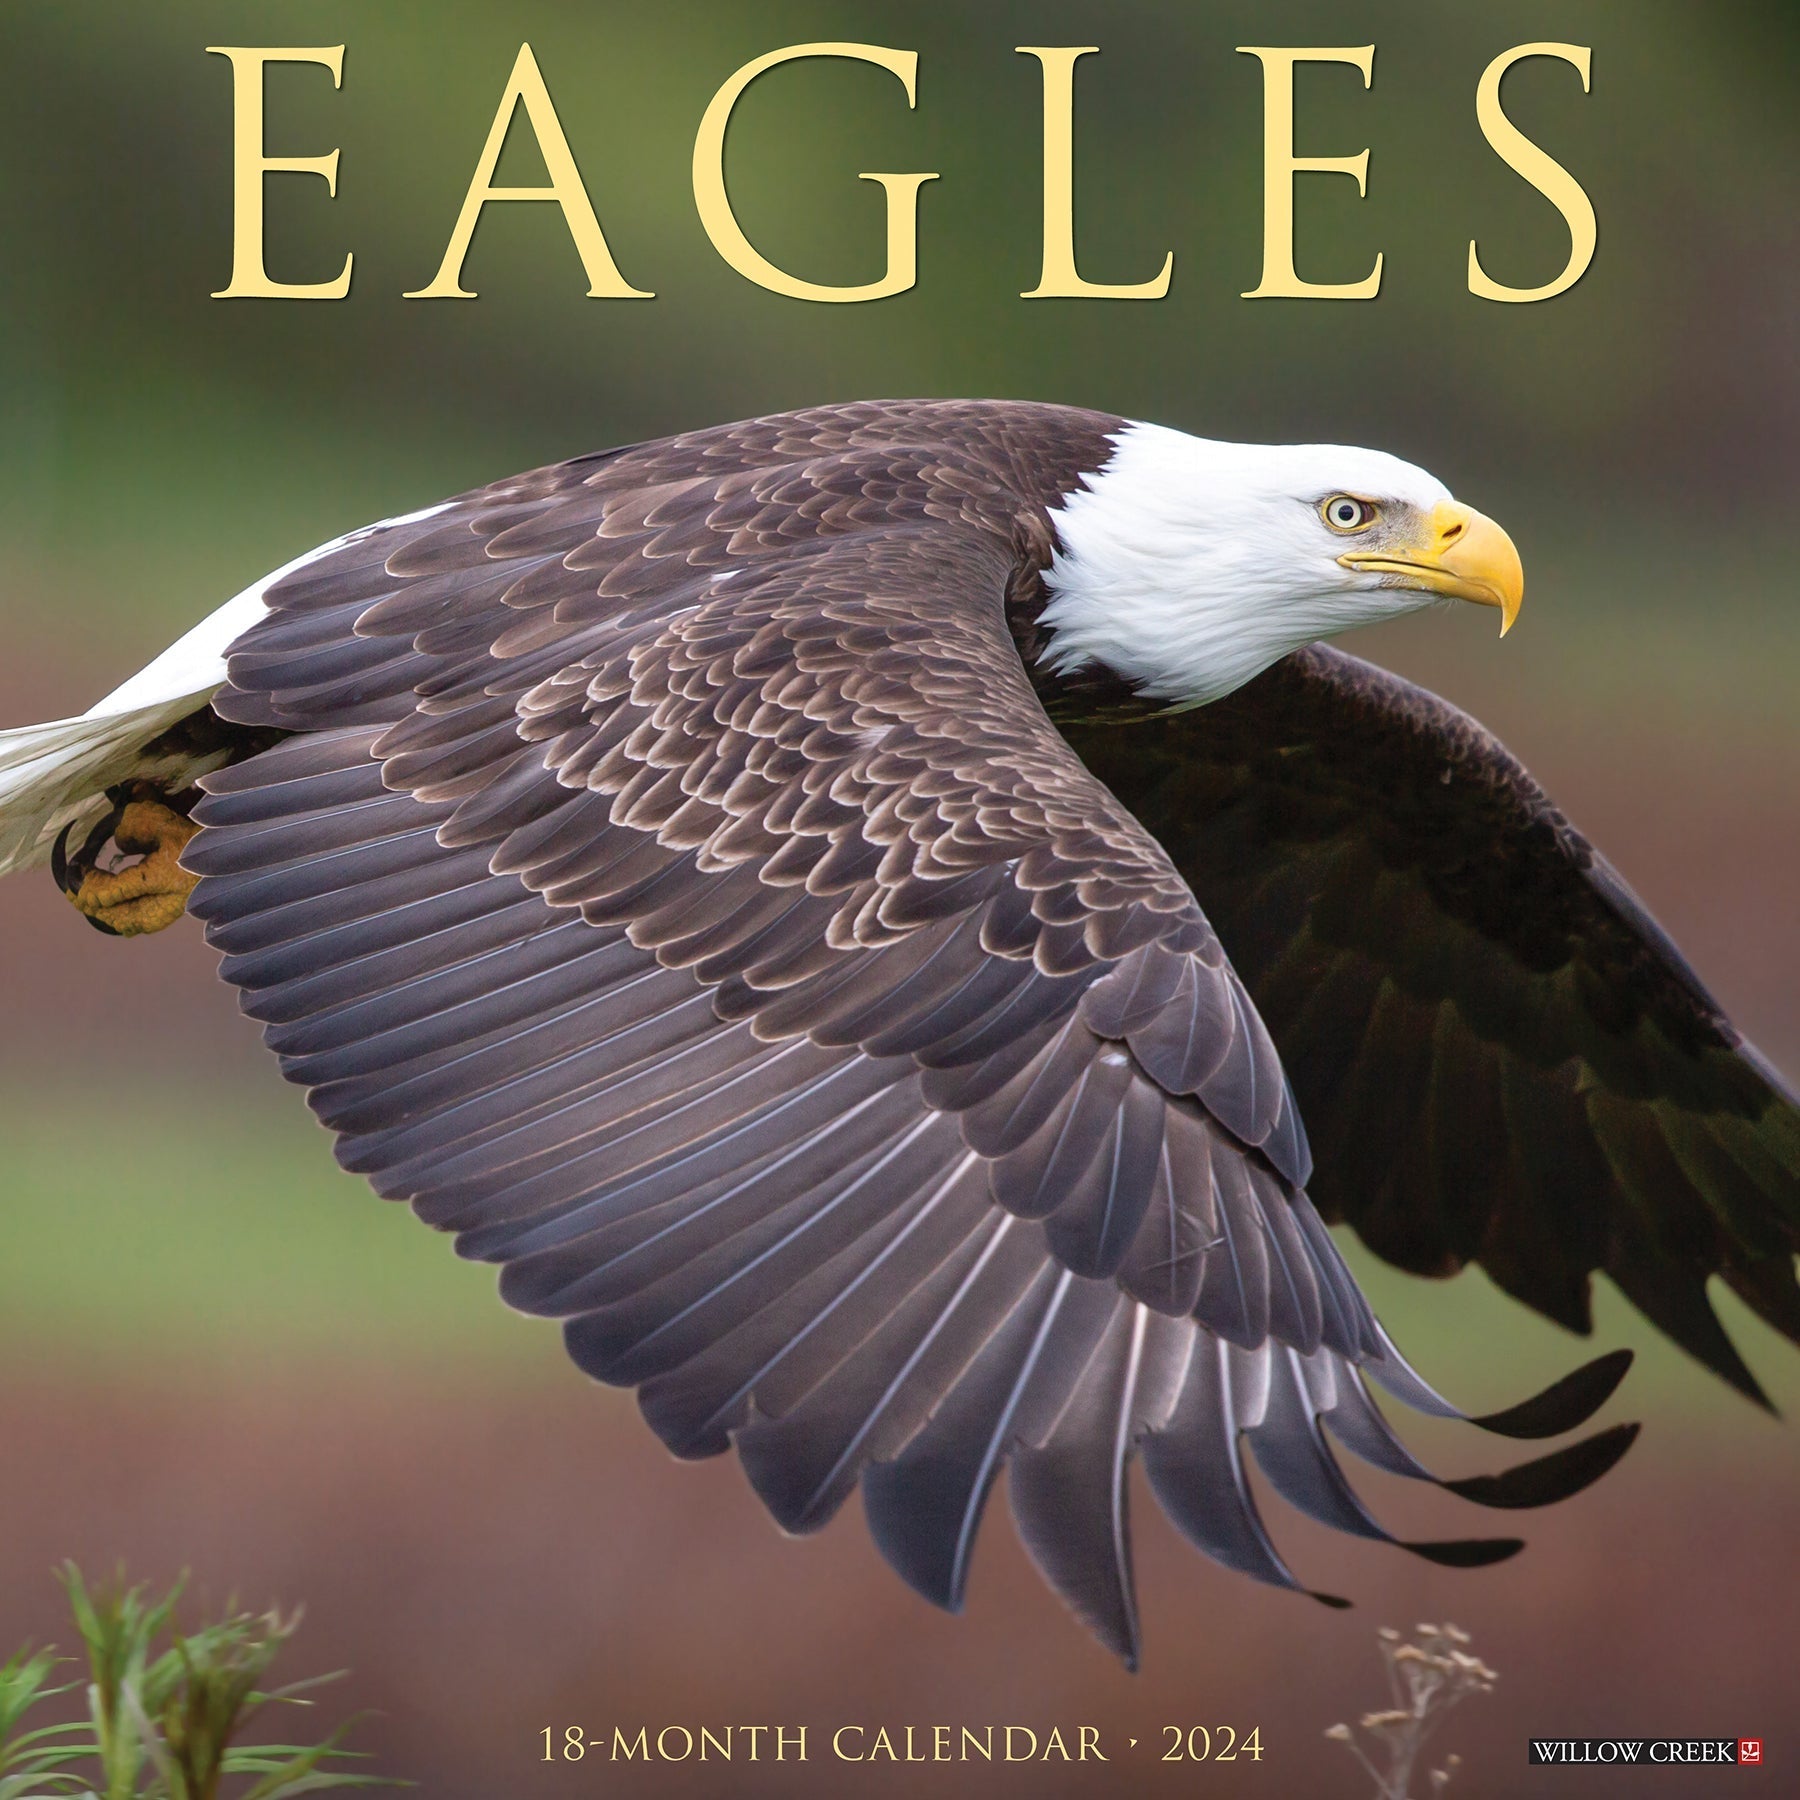 2024 Eagles - Wall Calendar